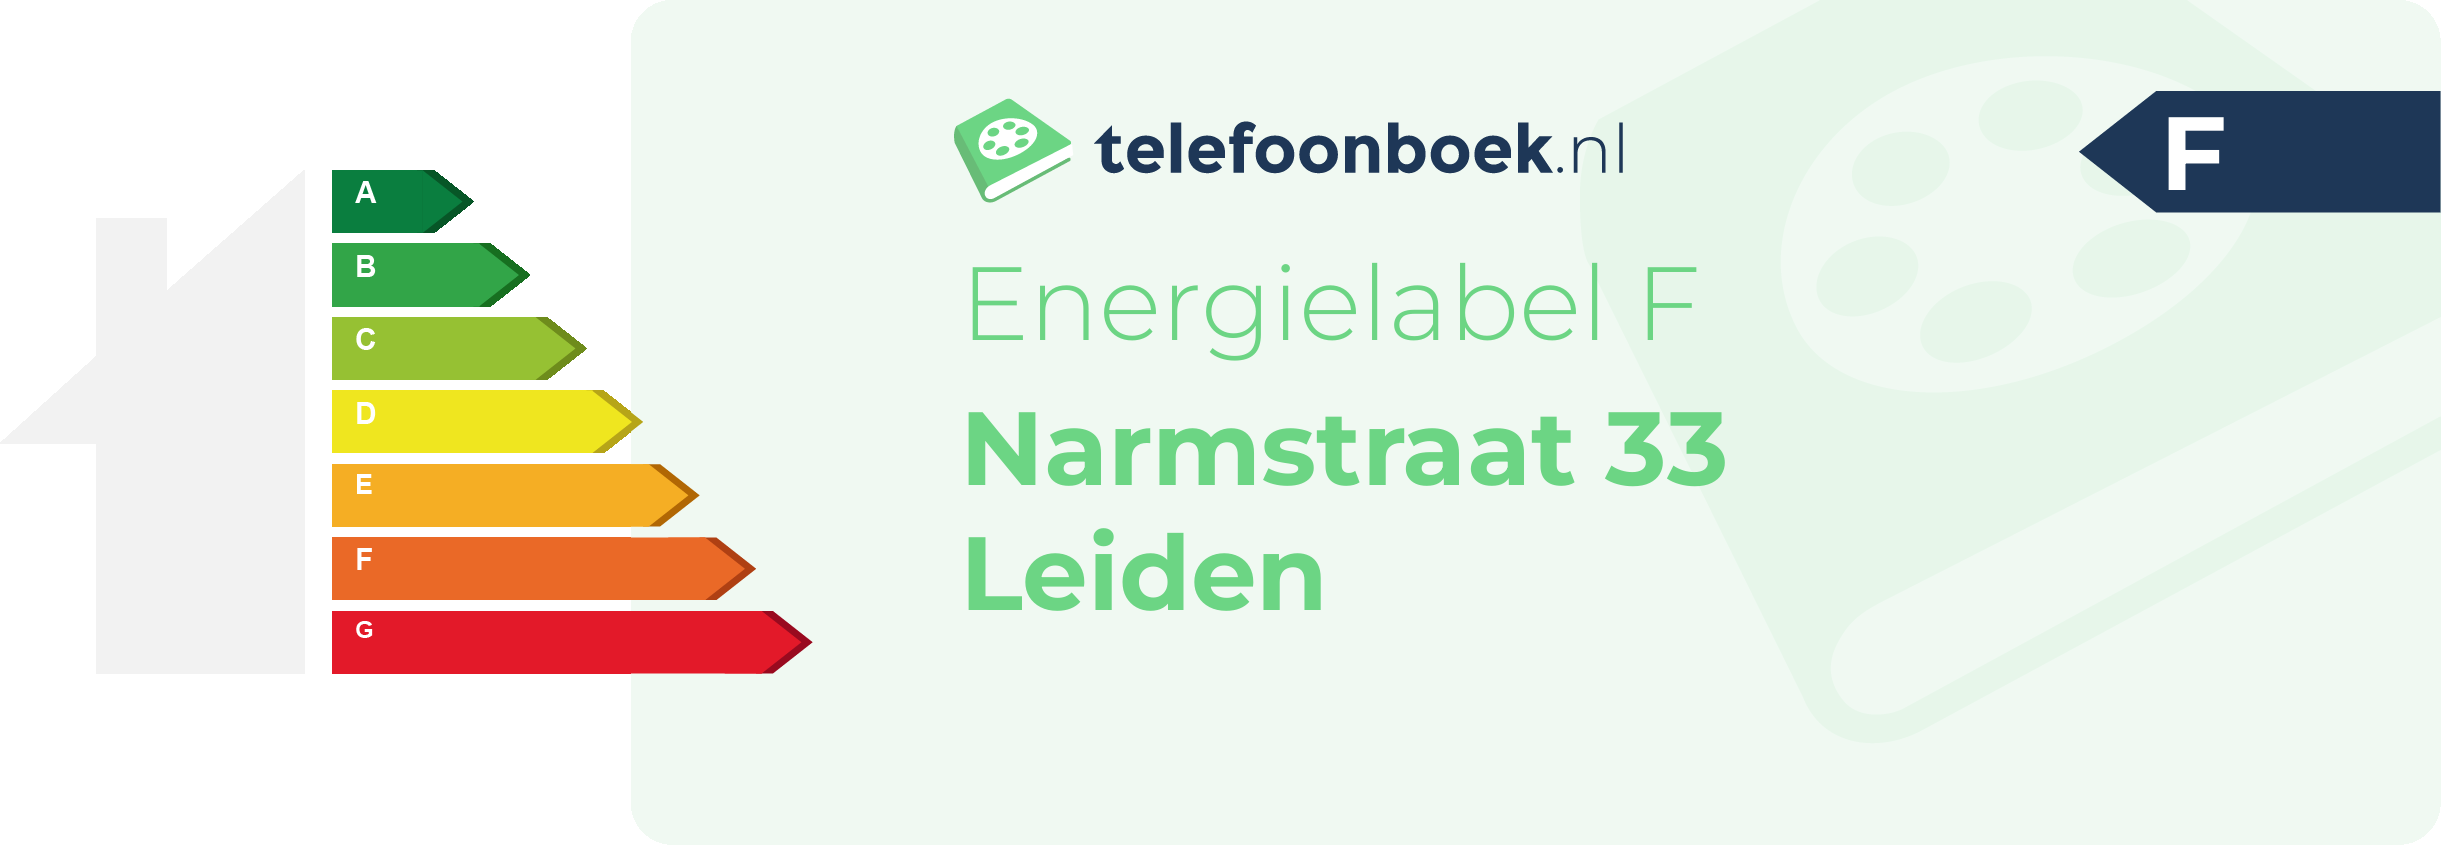 Energielabel Narmstraat 33 Leiden